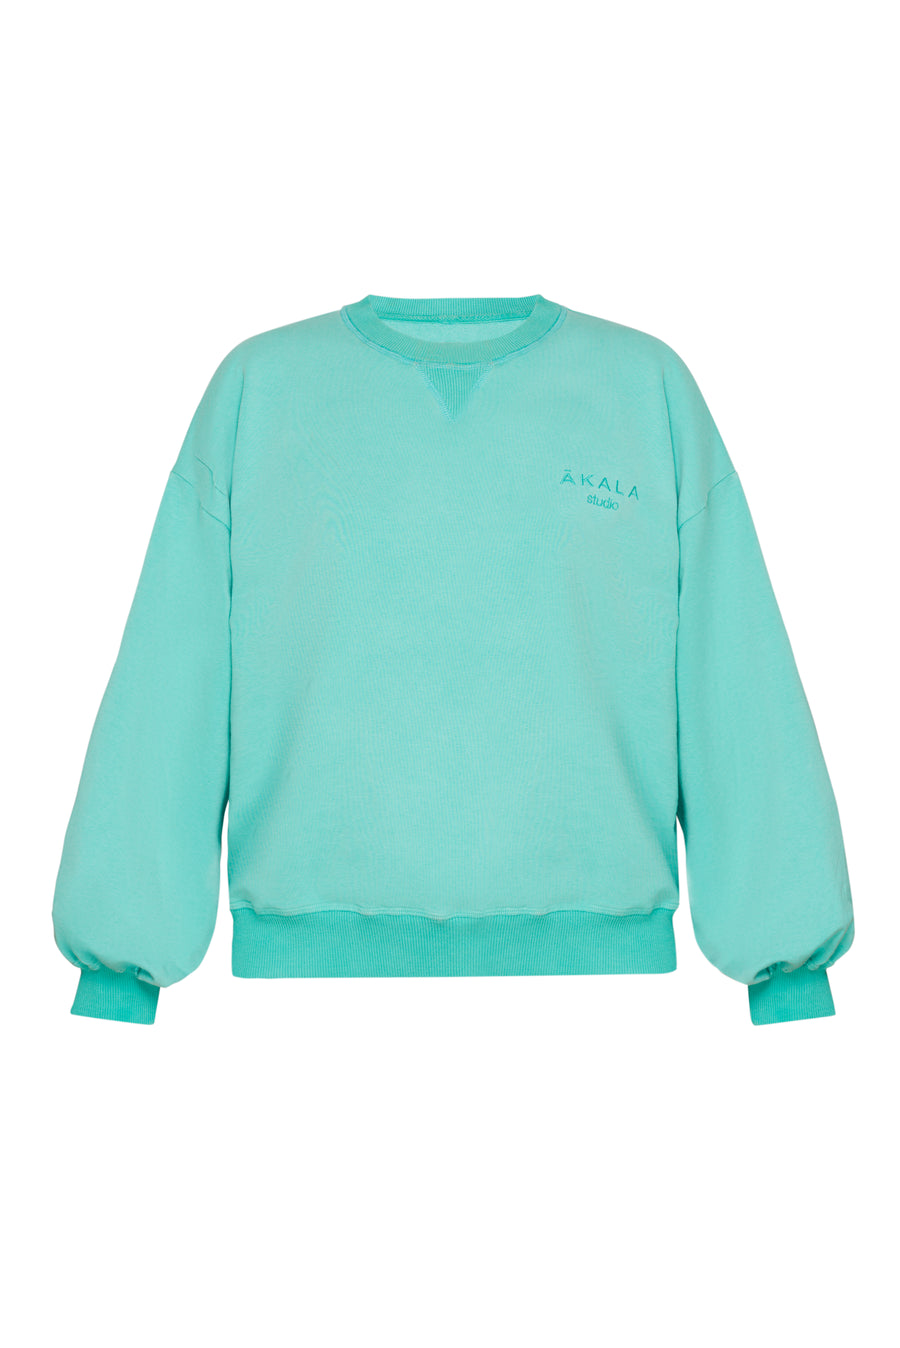 Sea blue sweater